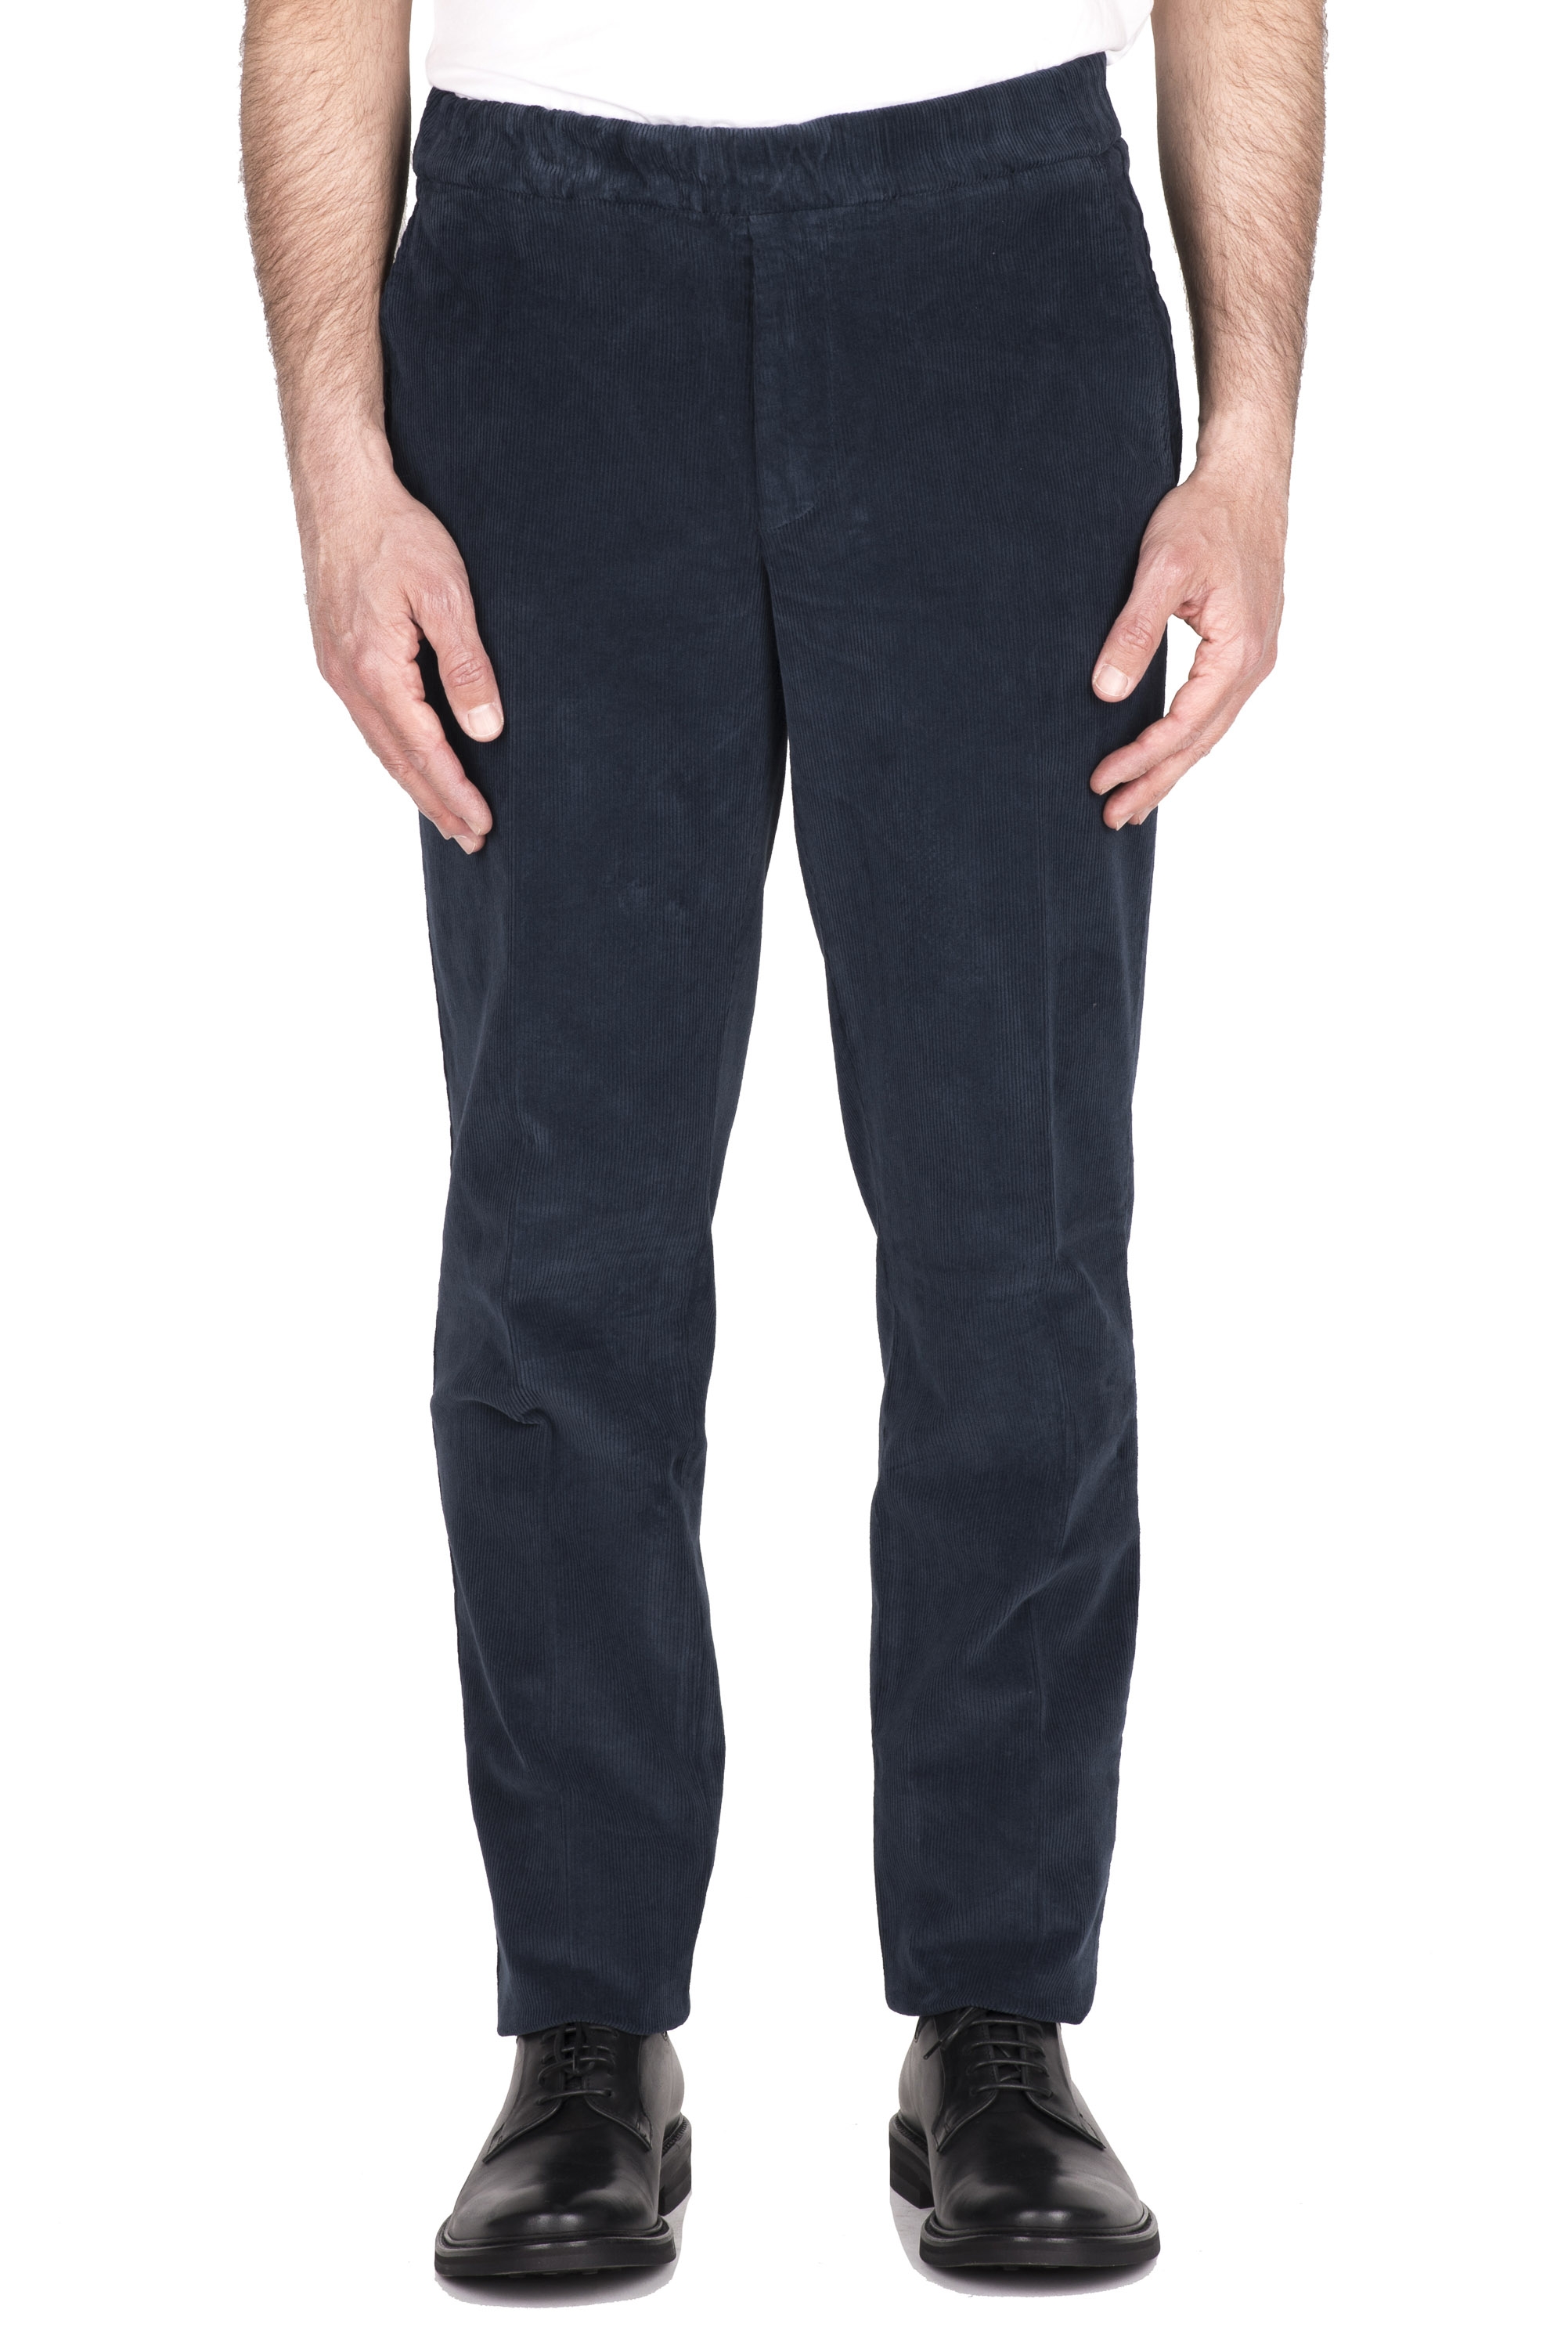 SBU 04627_23AW Comfort pants in blue stretch corduroy 01